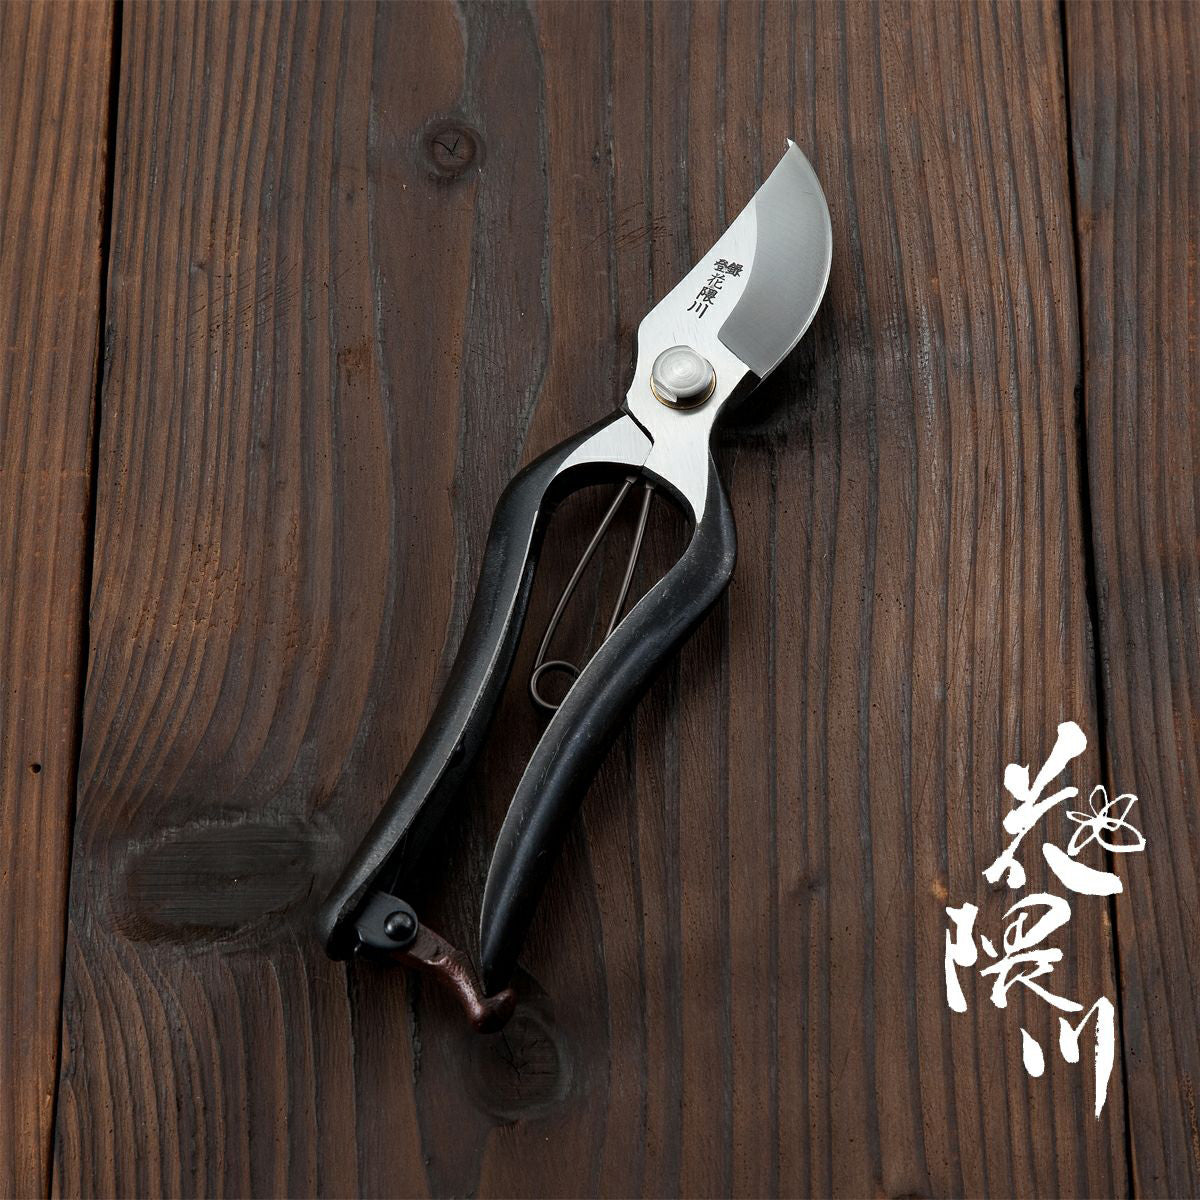 Garden shears wooden handle